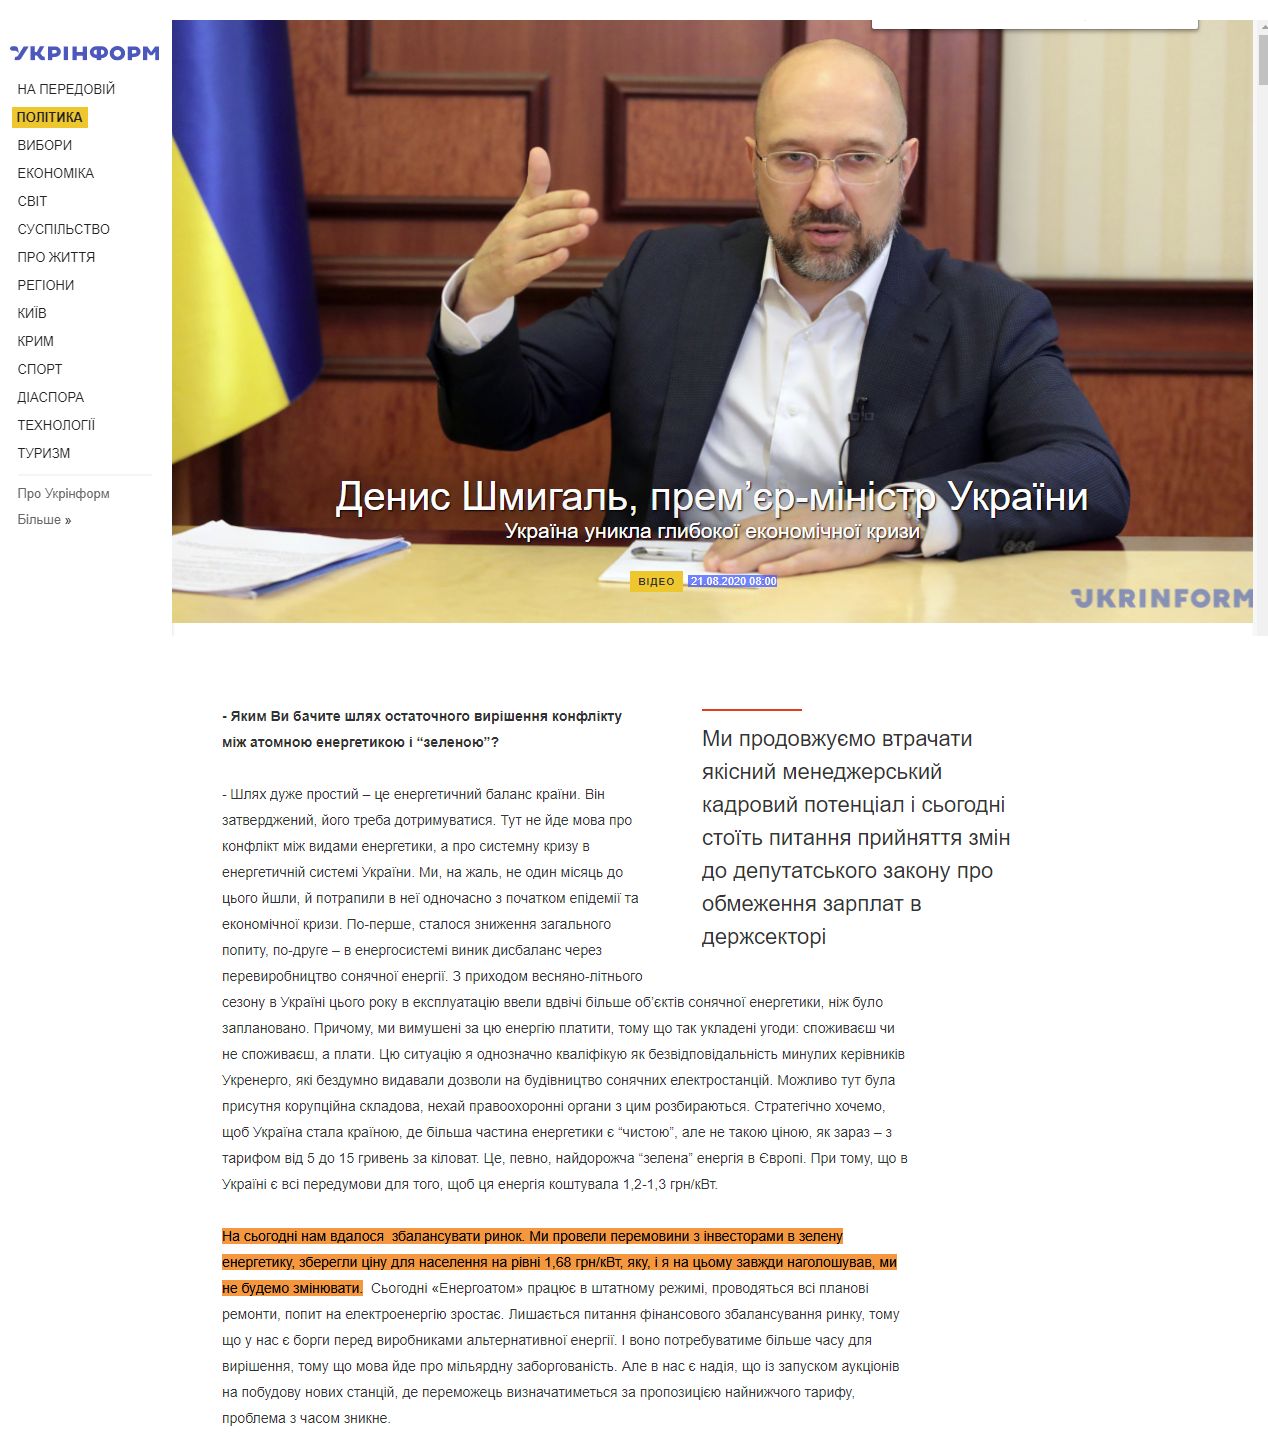 https://www.ukrinform.ua/rubric-polytics/3084917-denis-smigal-premerministr-ukraini.html